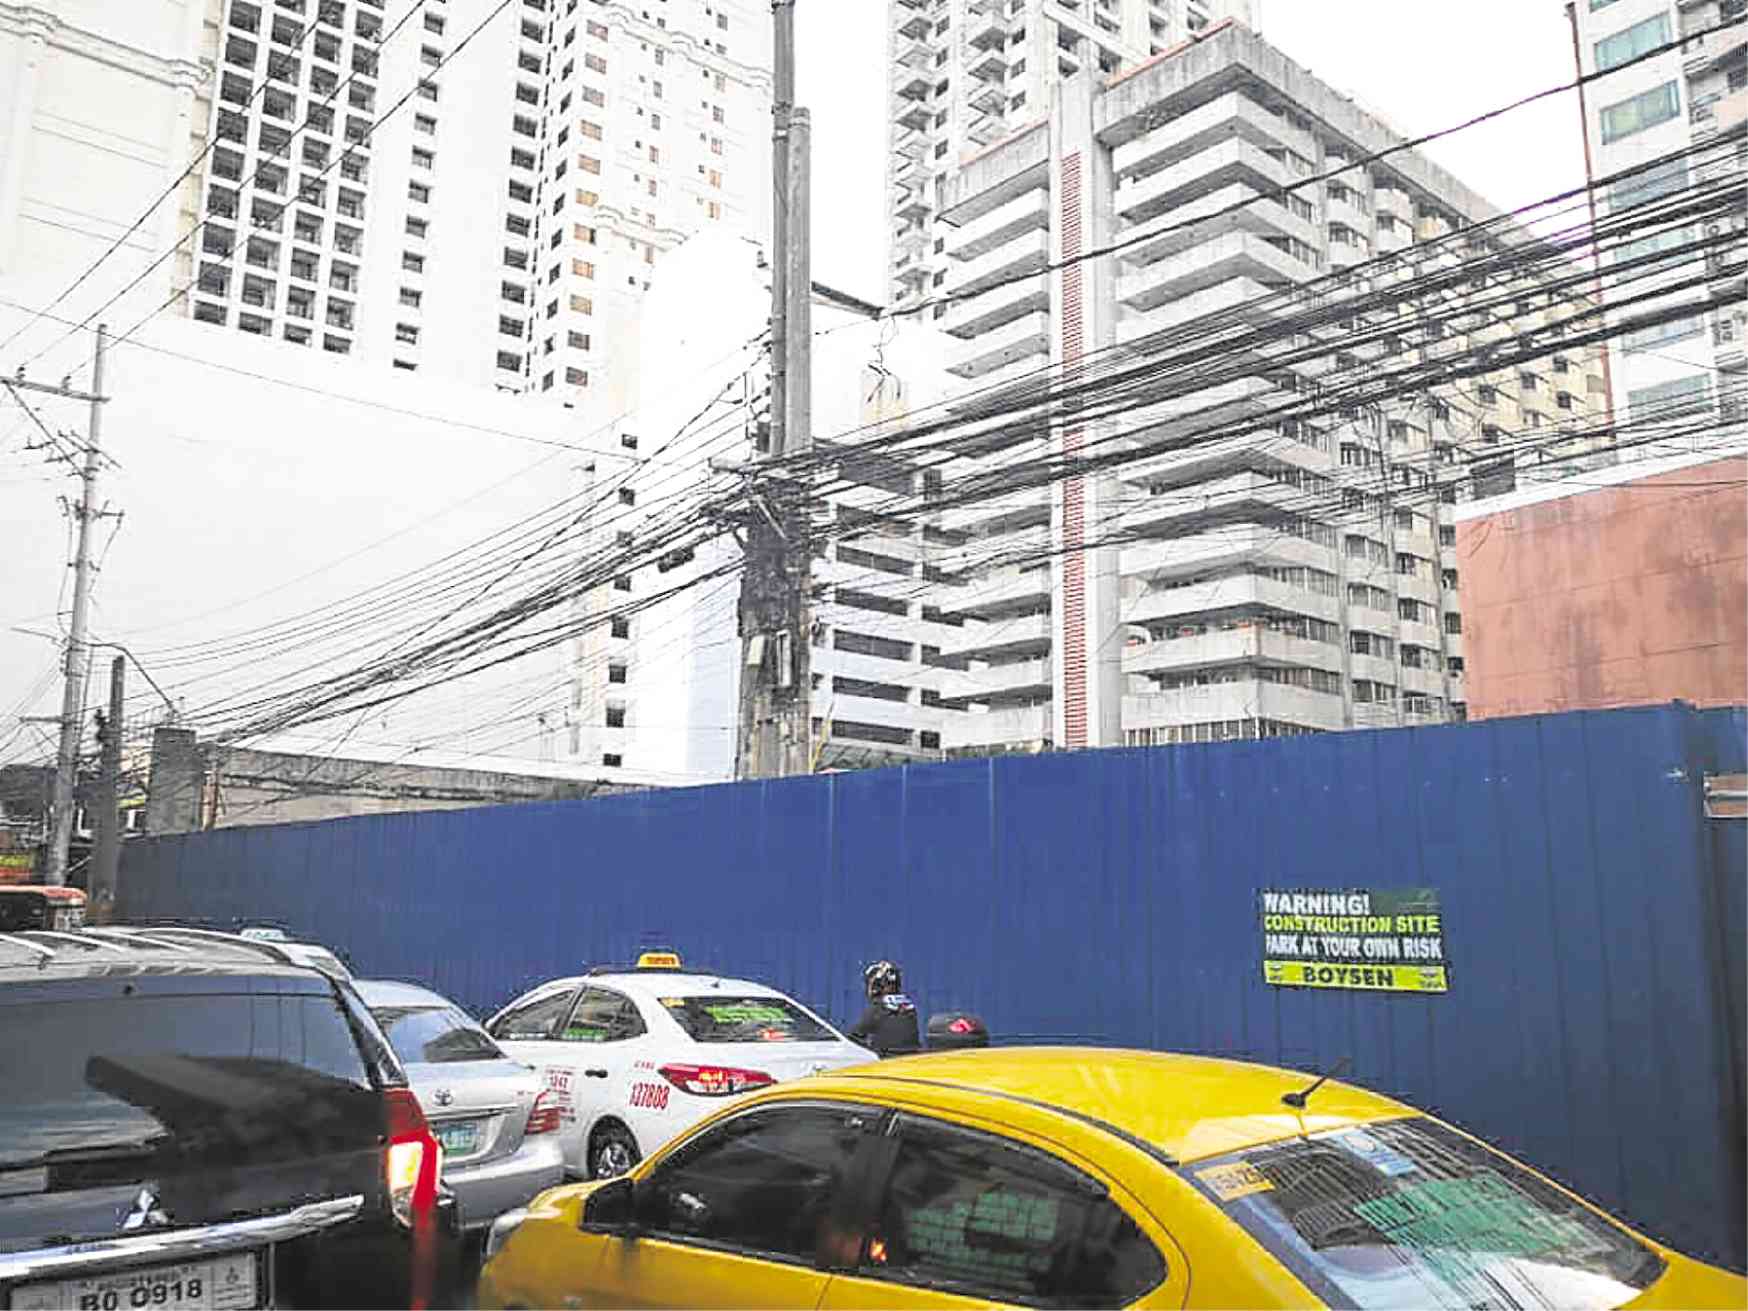 Angela Apartments in Manila demolished